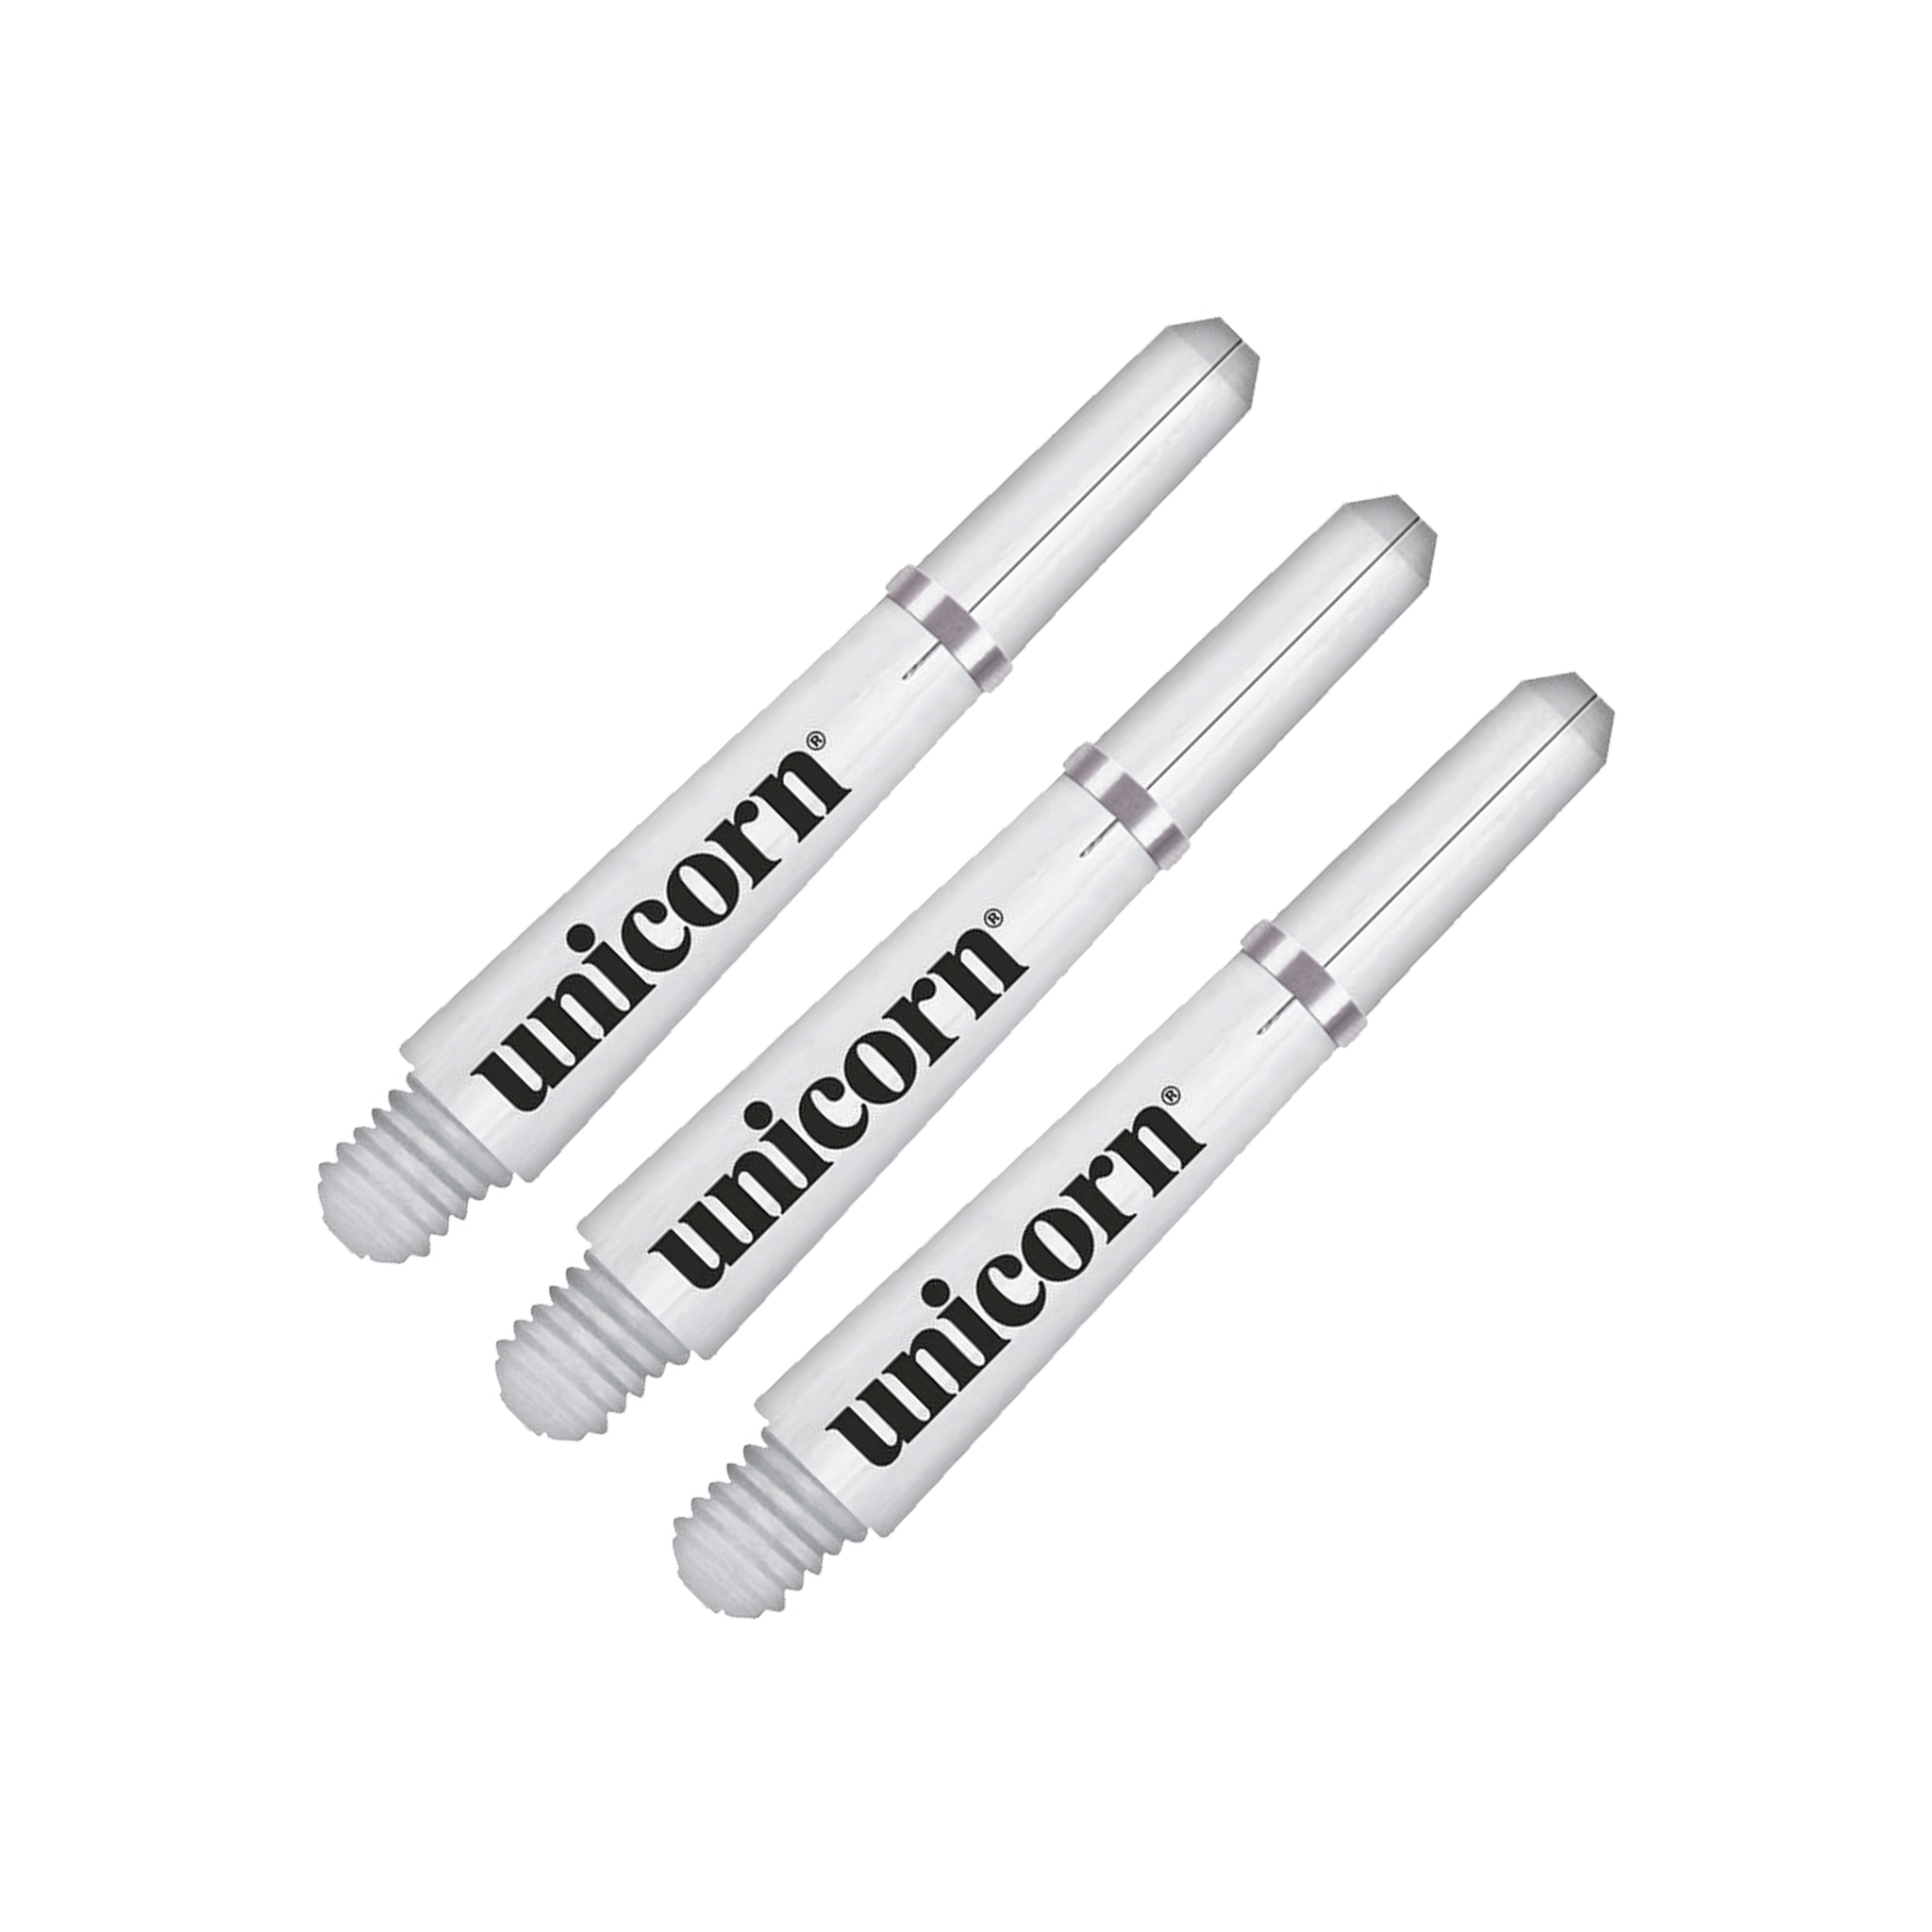 Unicorn Gripper 4 Polycarbonate Dart Shafts Clear / Short (35mm) Shafts